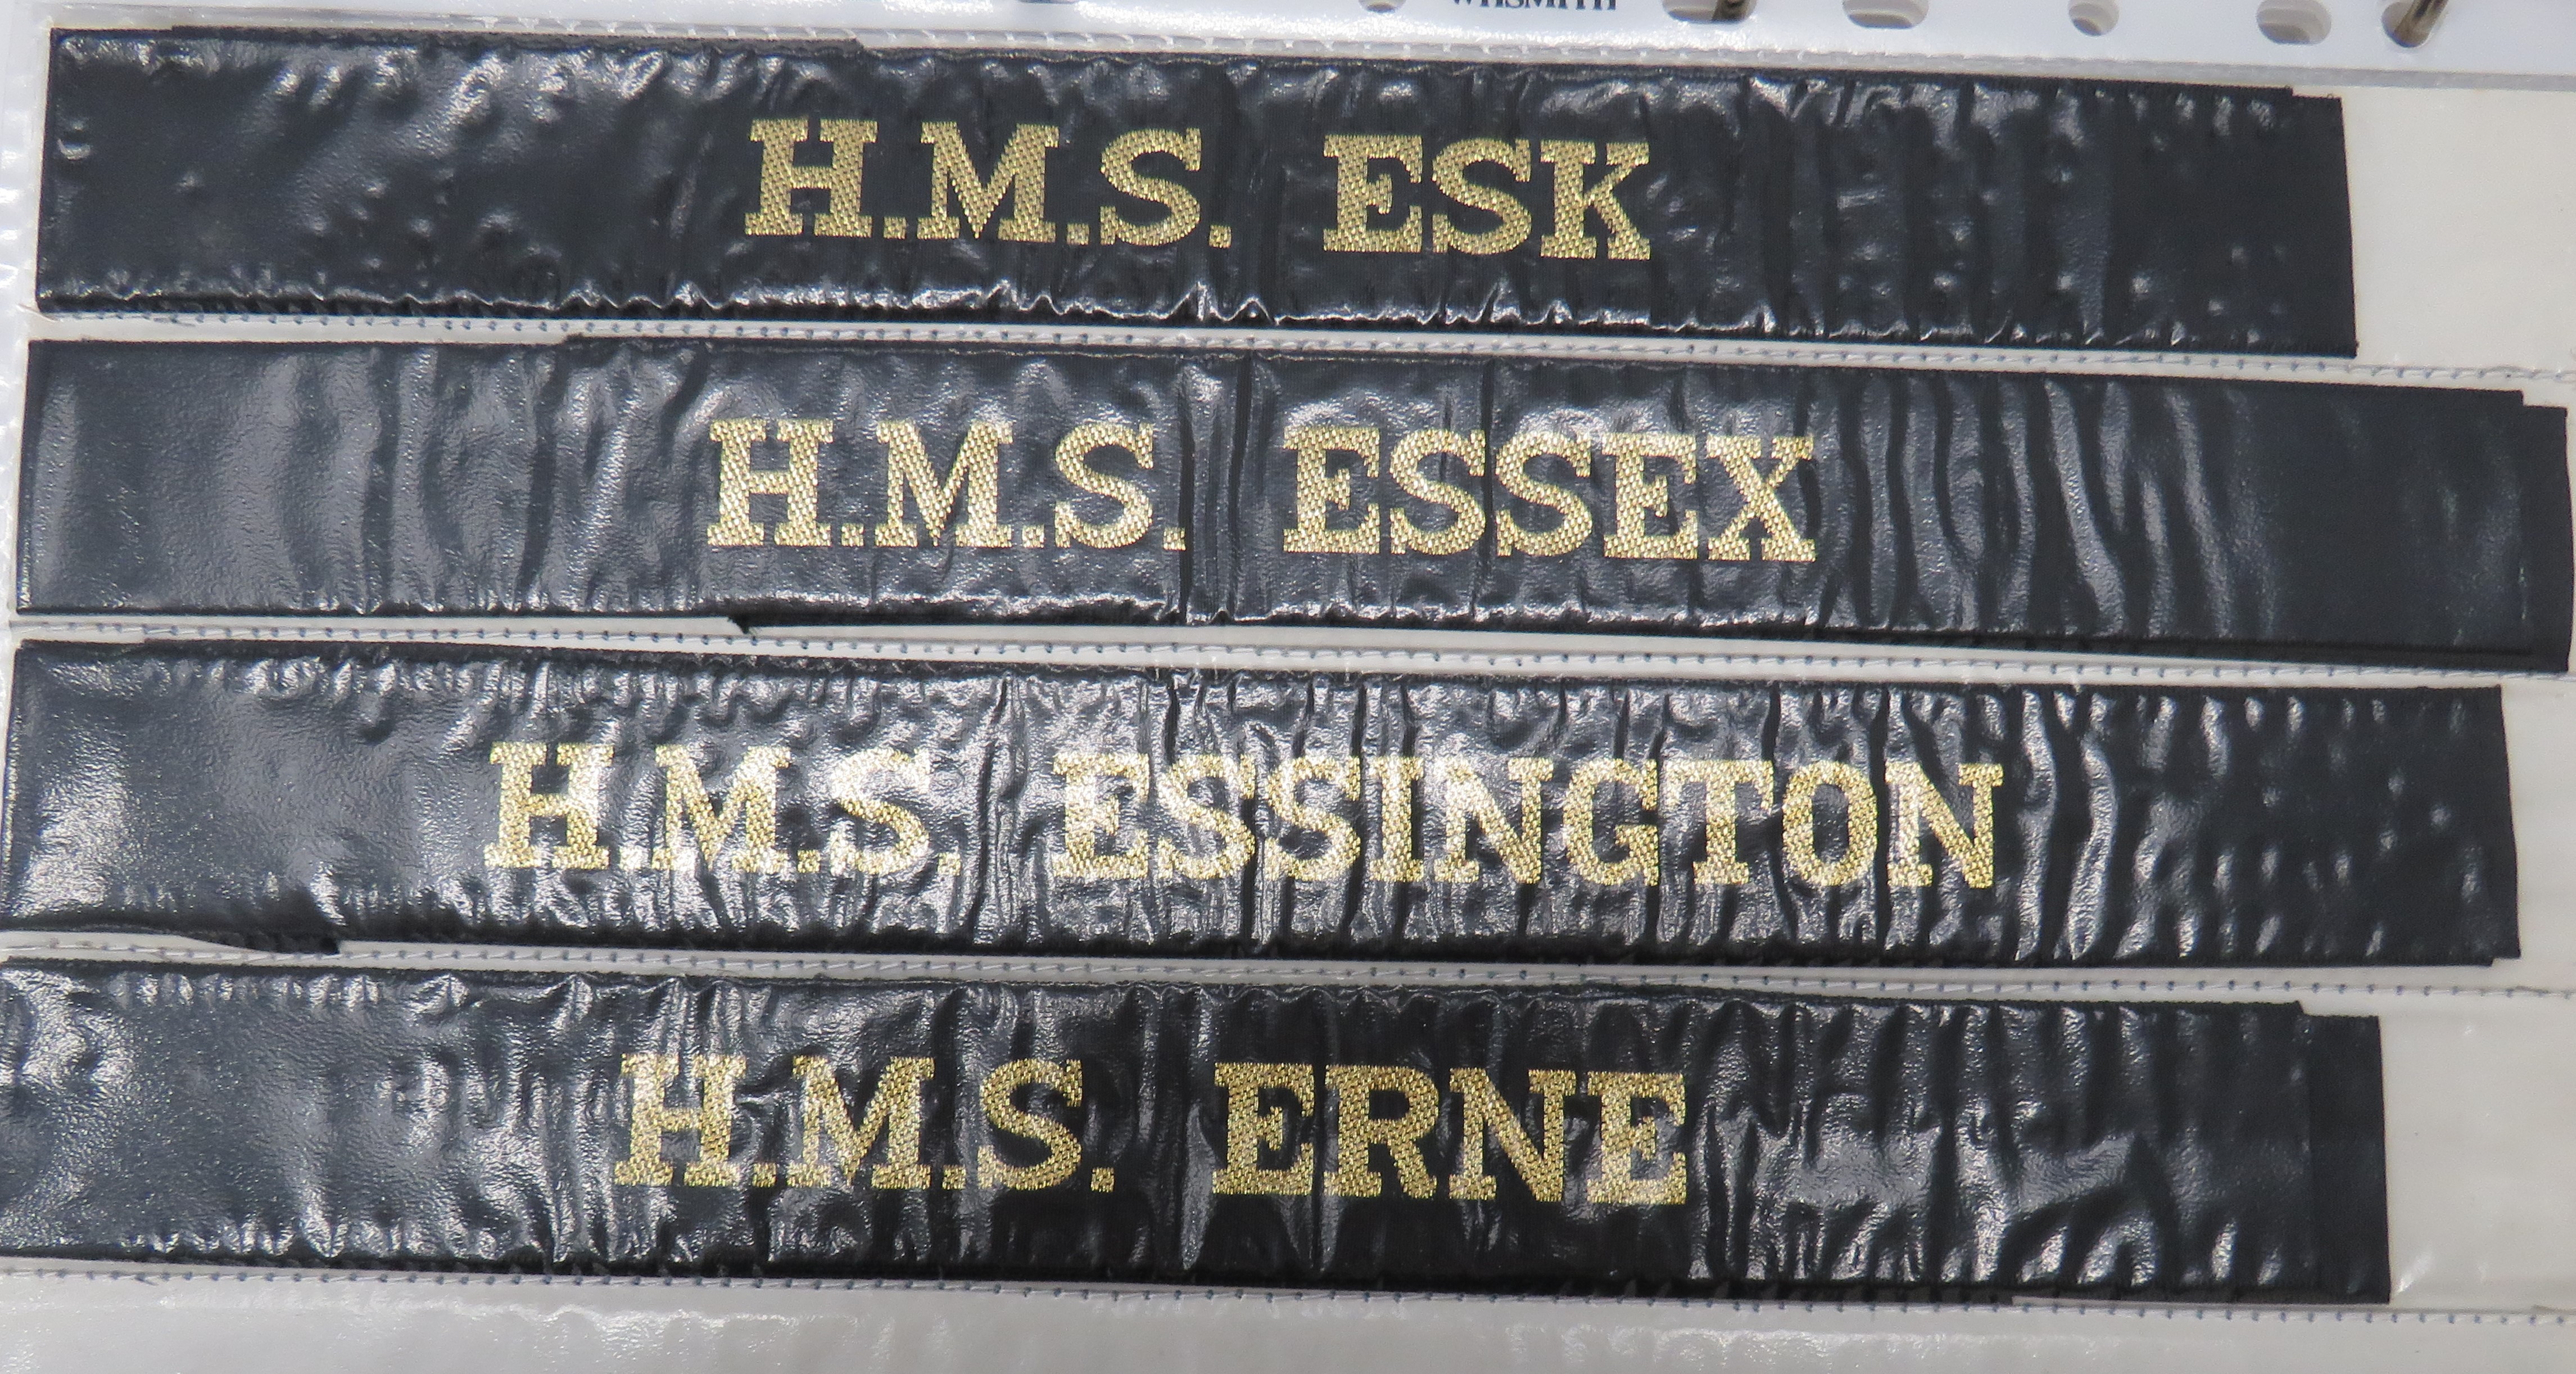 Collection Of 110 Post War Royal Navy Cap Tallies including HMS Eagle ... HMS Ekins ... HMS - Image 2 of 3